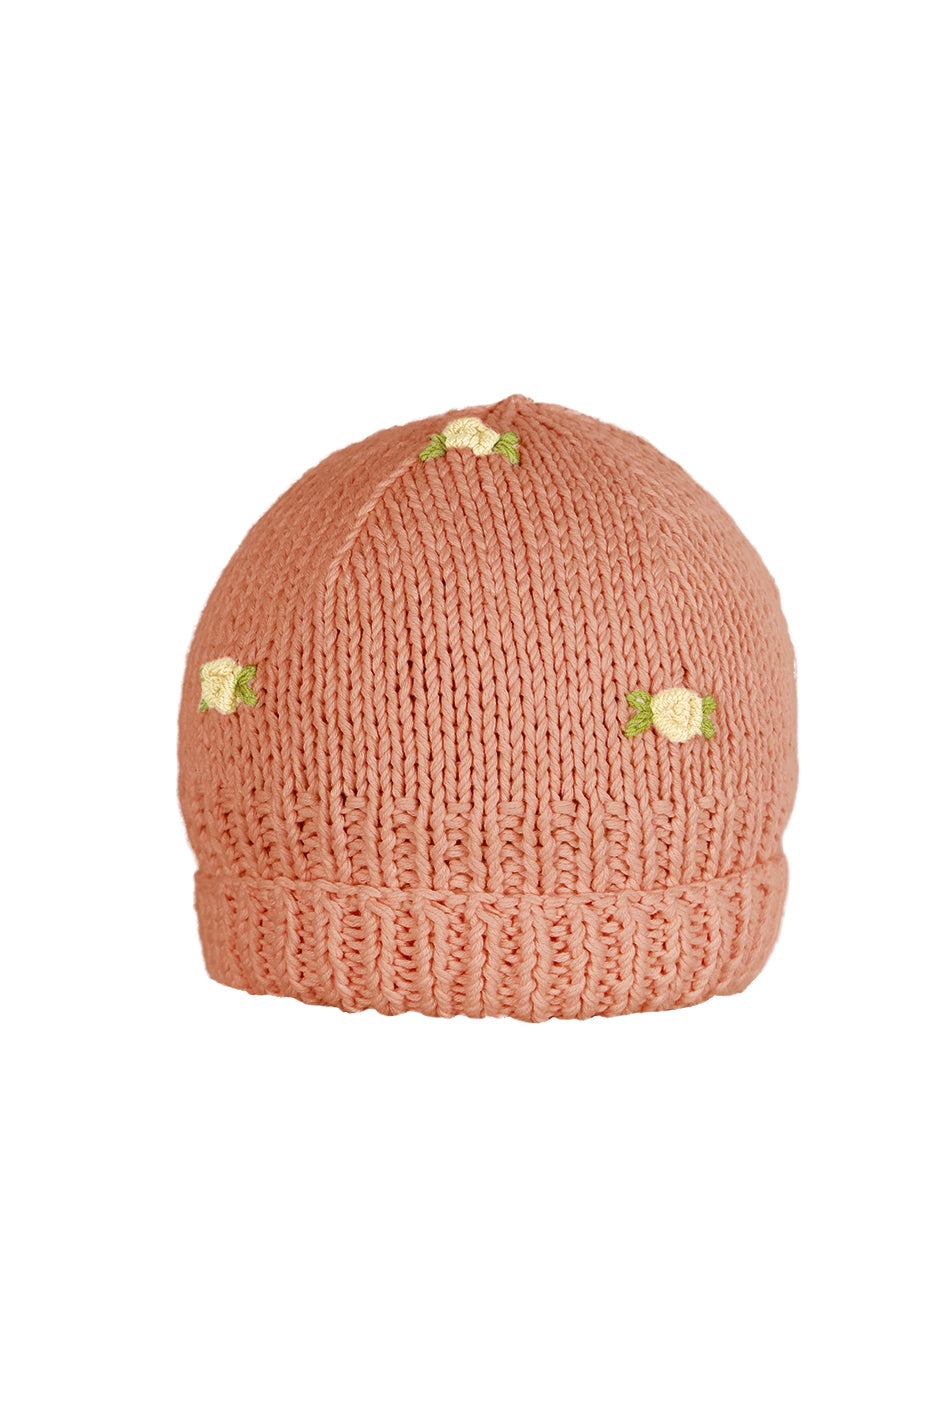 WINTER BLOOM YELLOW ROSE Cotton Beanie Hat